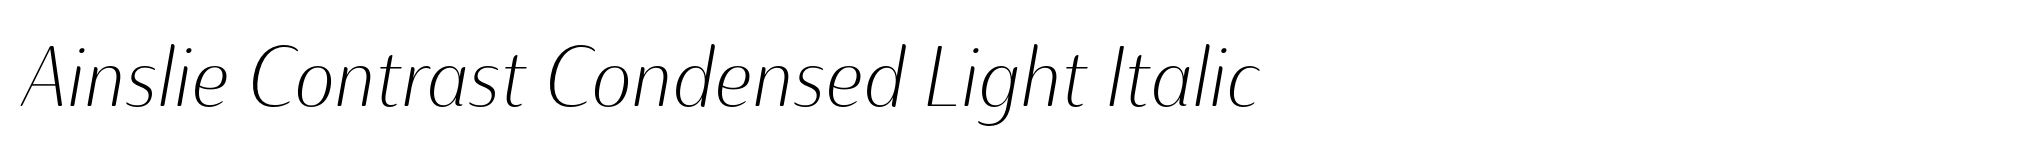 Ainslie Contrast Condensed Light Italic image